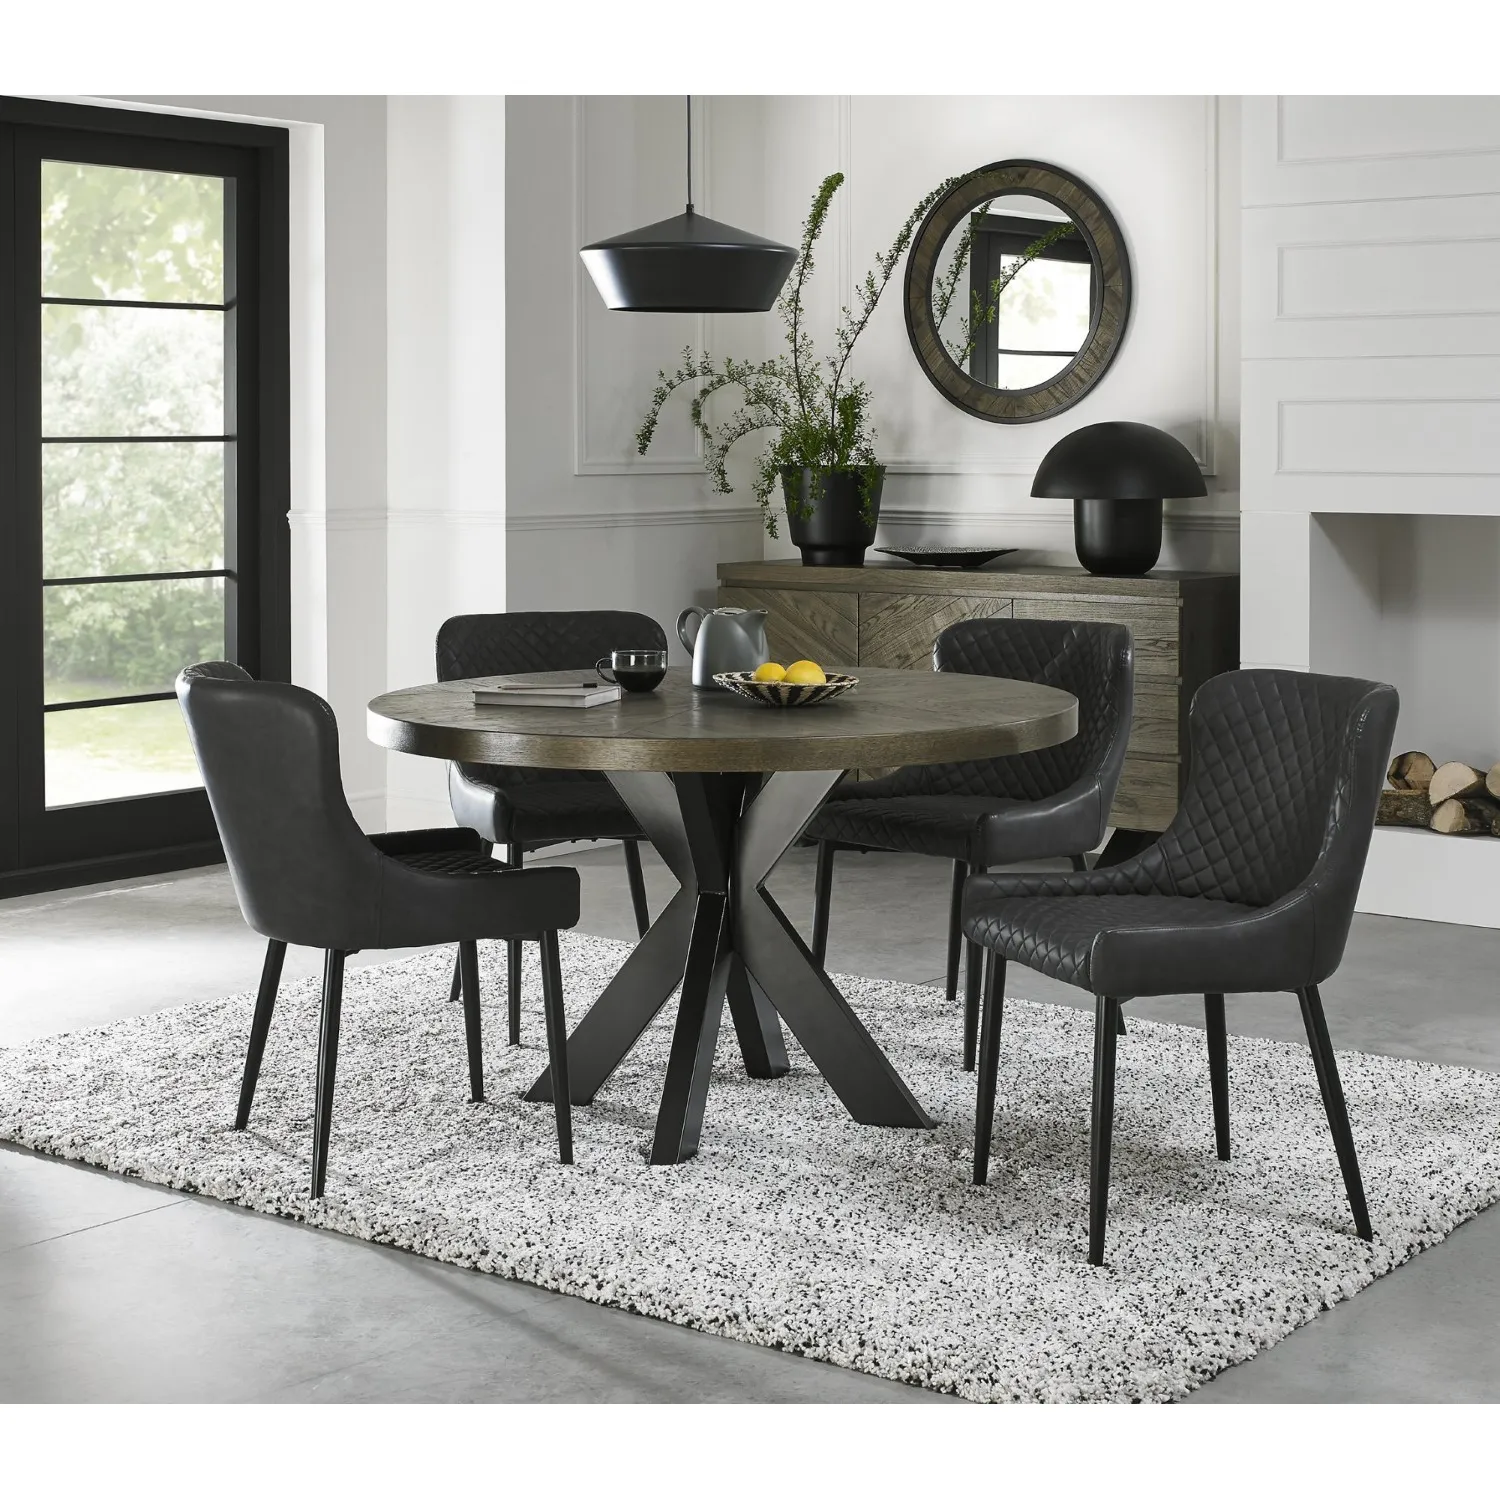 Dark Oak Small Dining Table Set 4 Dark Grey Leather Chairs